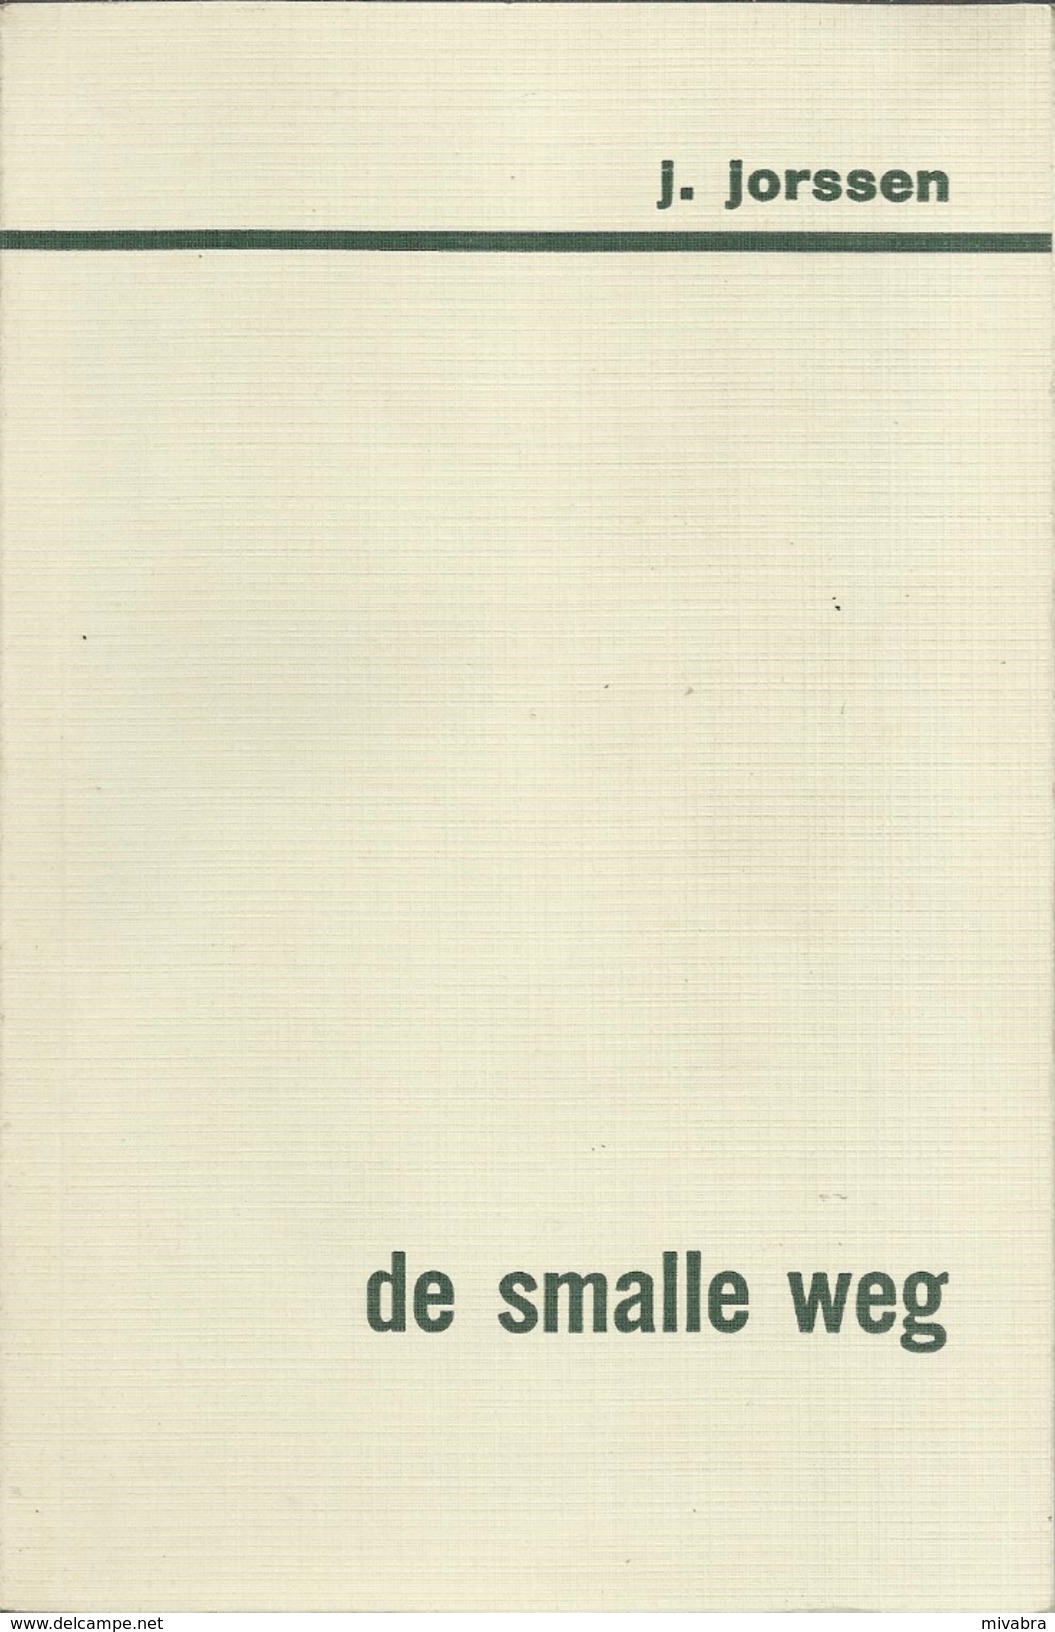 JET JORSSEN - DE SMALLE WEG - BEIAARD REEKS DAVIDSFONDS LEUVEN Nr. 547 - 1967-2 - Literature